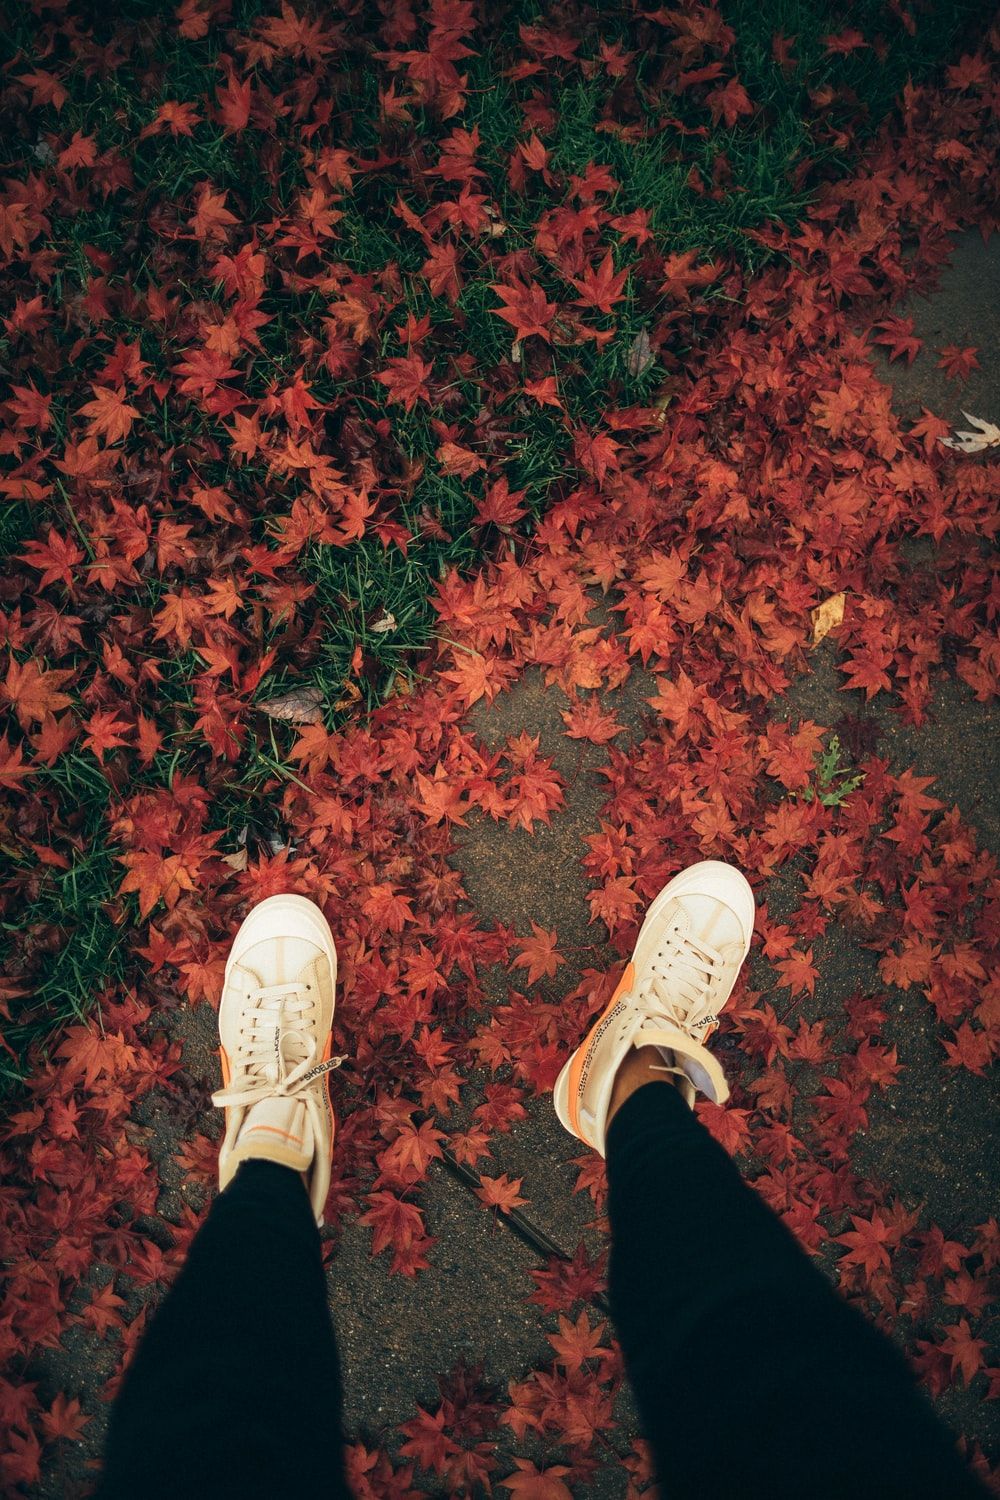 Autumn Season Picture. Download Free Image